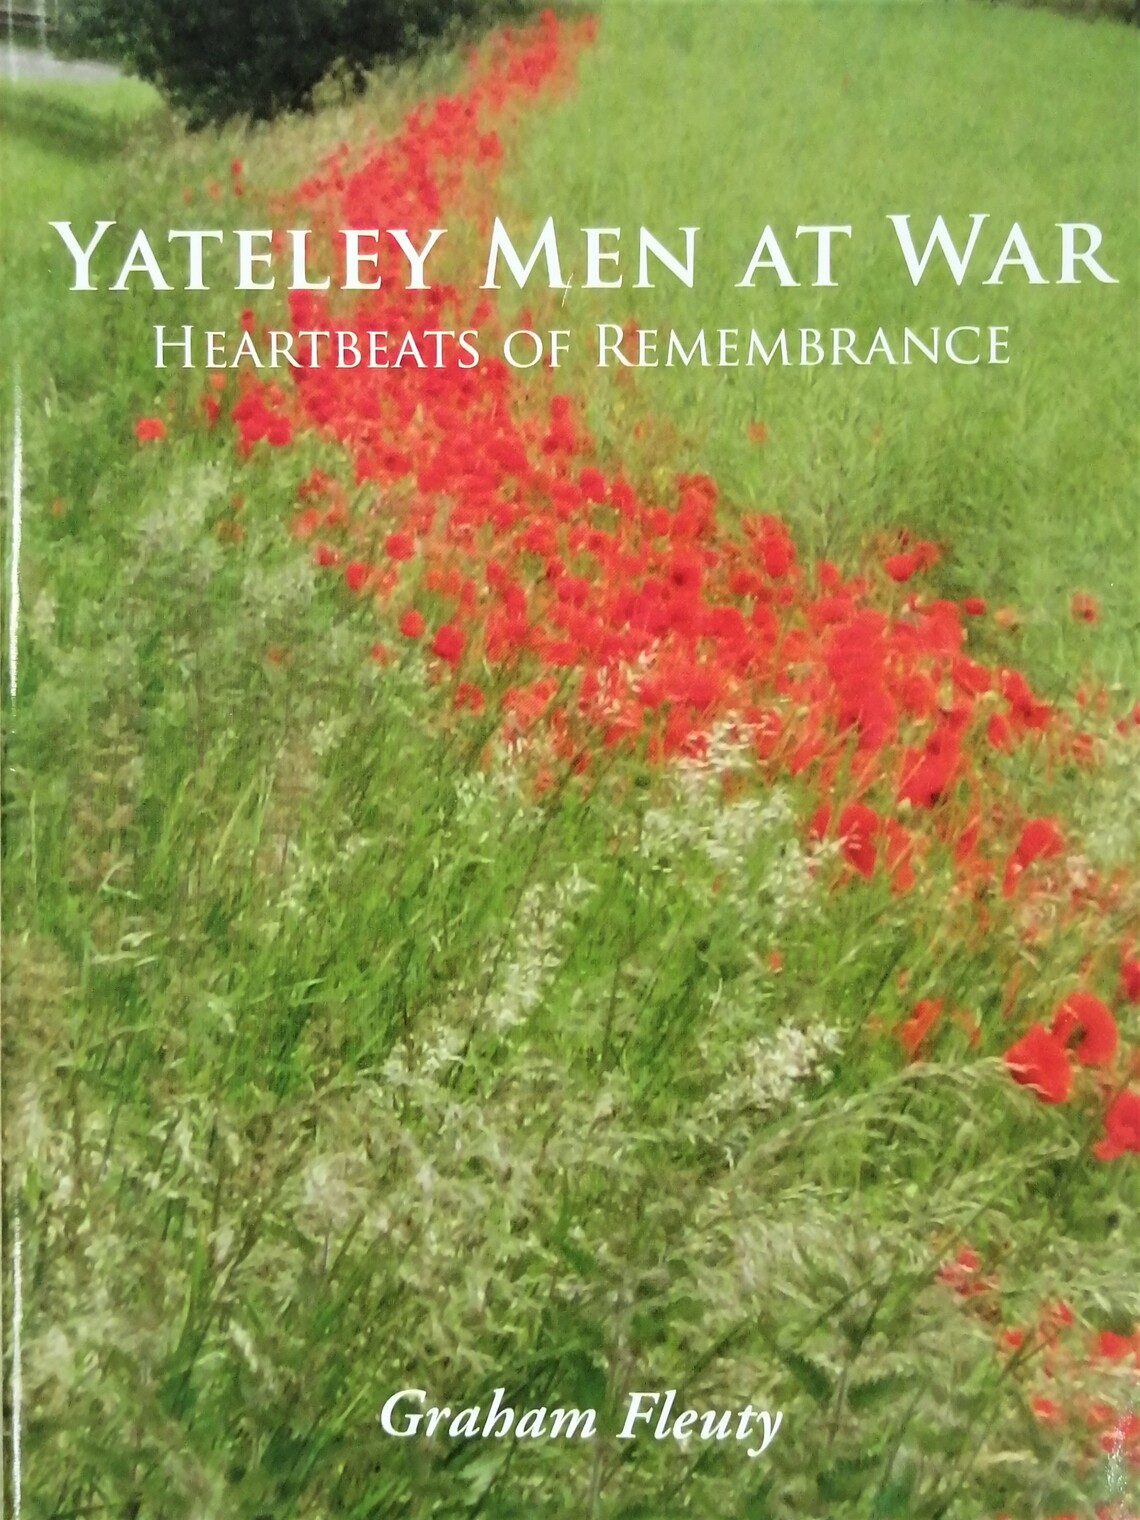 YATELEY MEN AT WAR